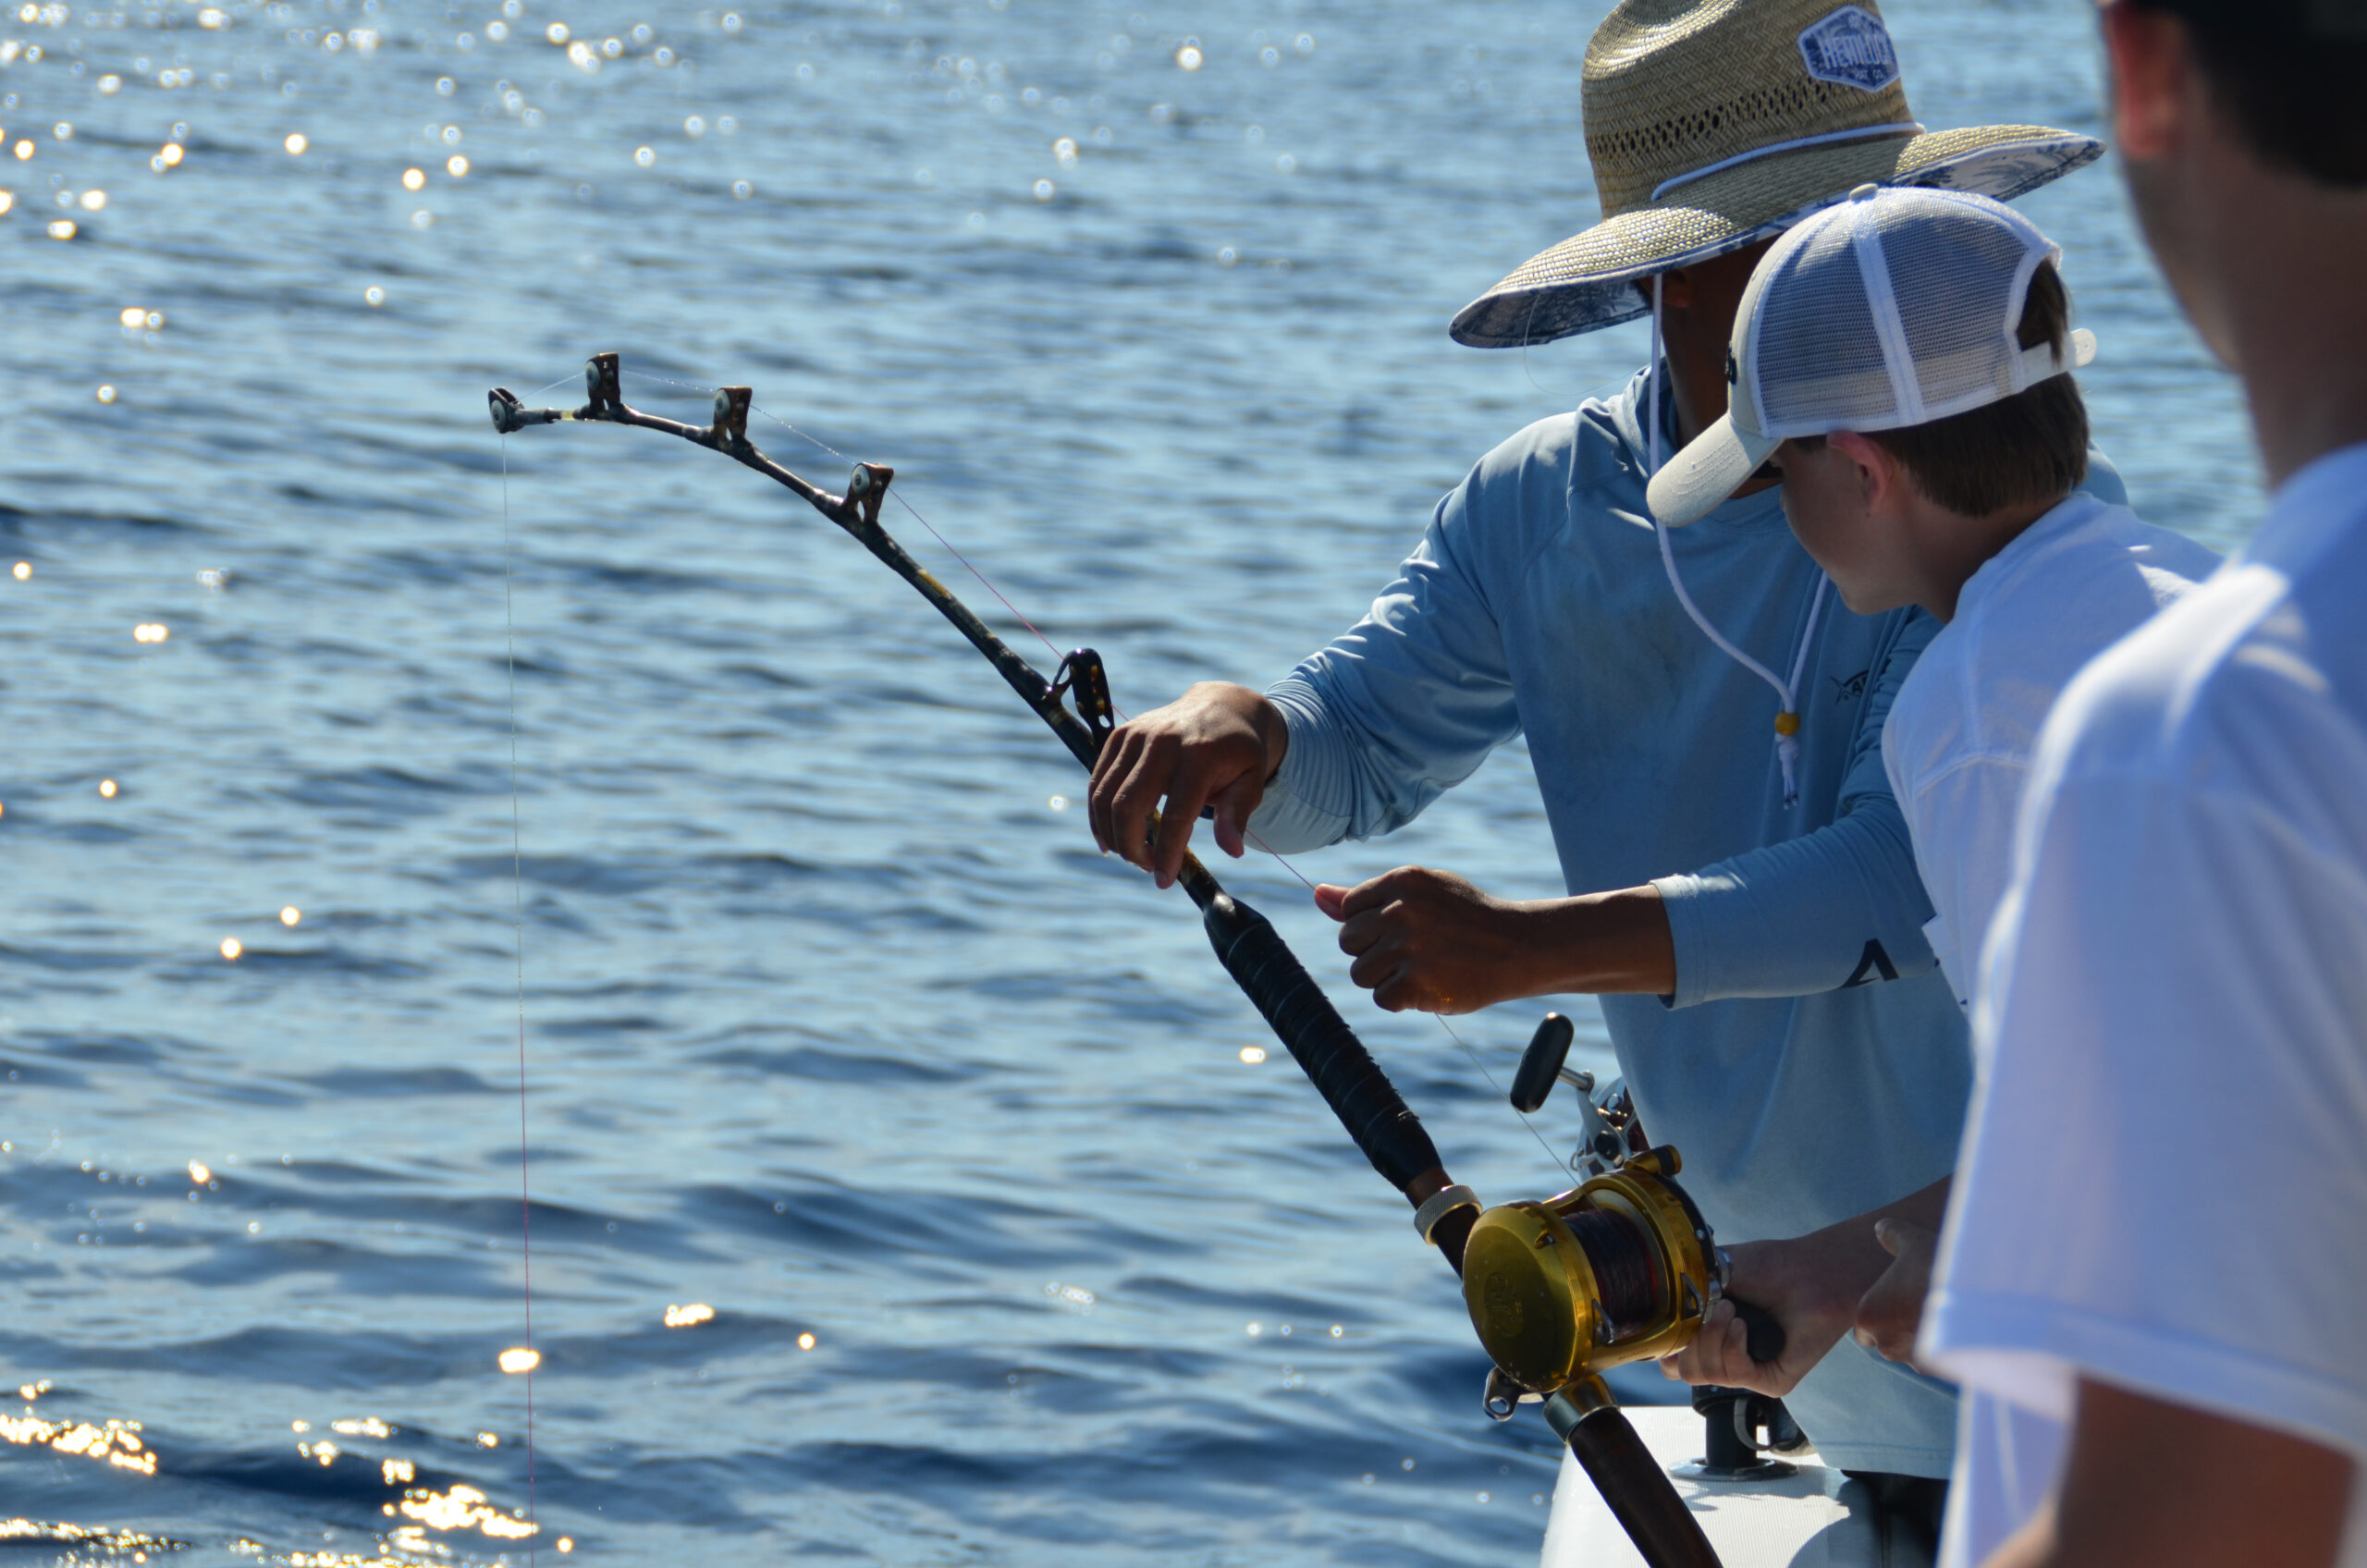 image: anglers fishing on boat.